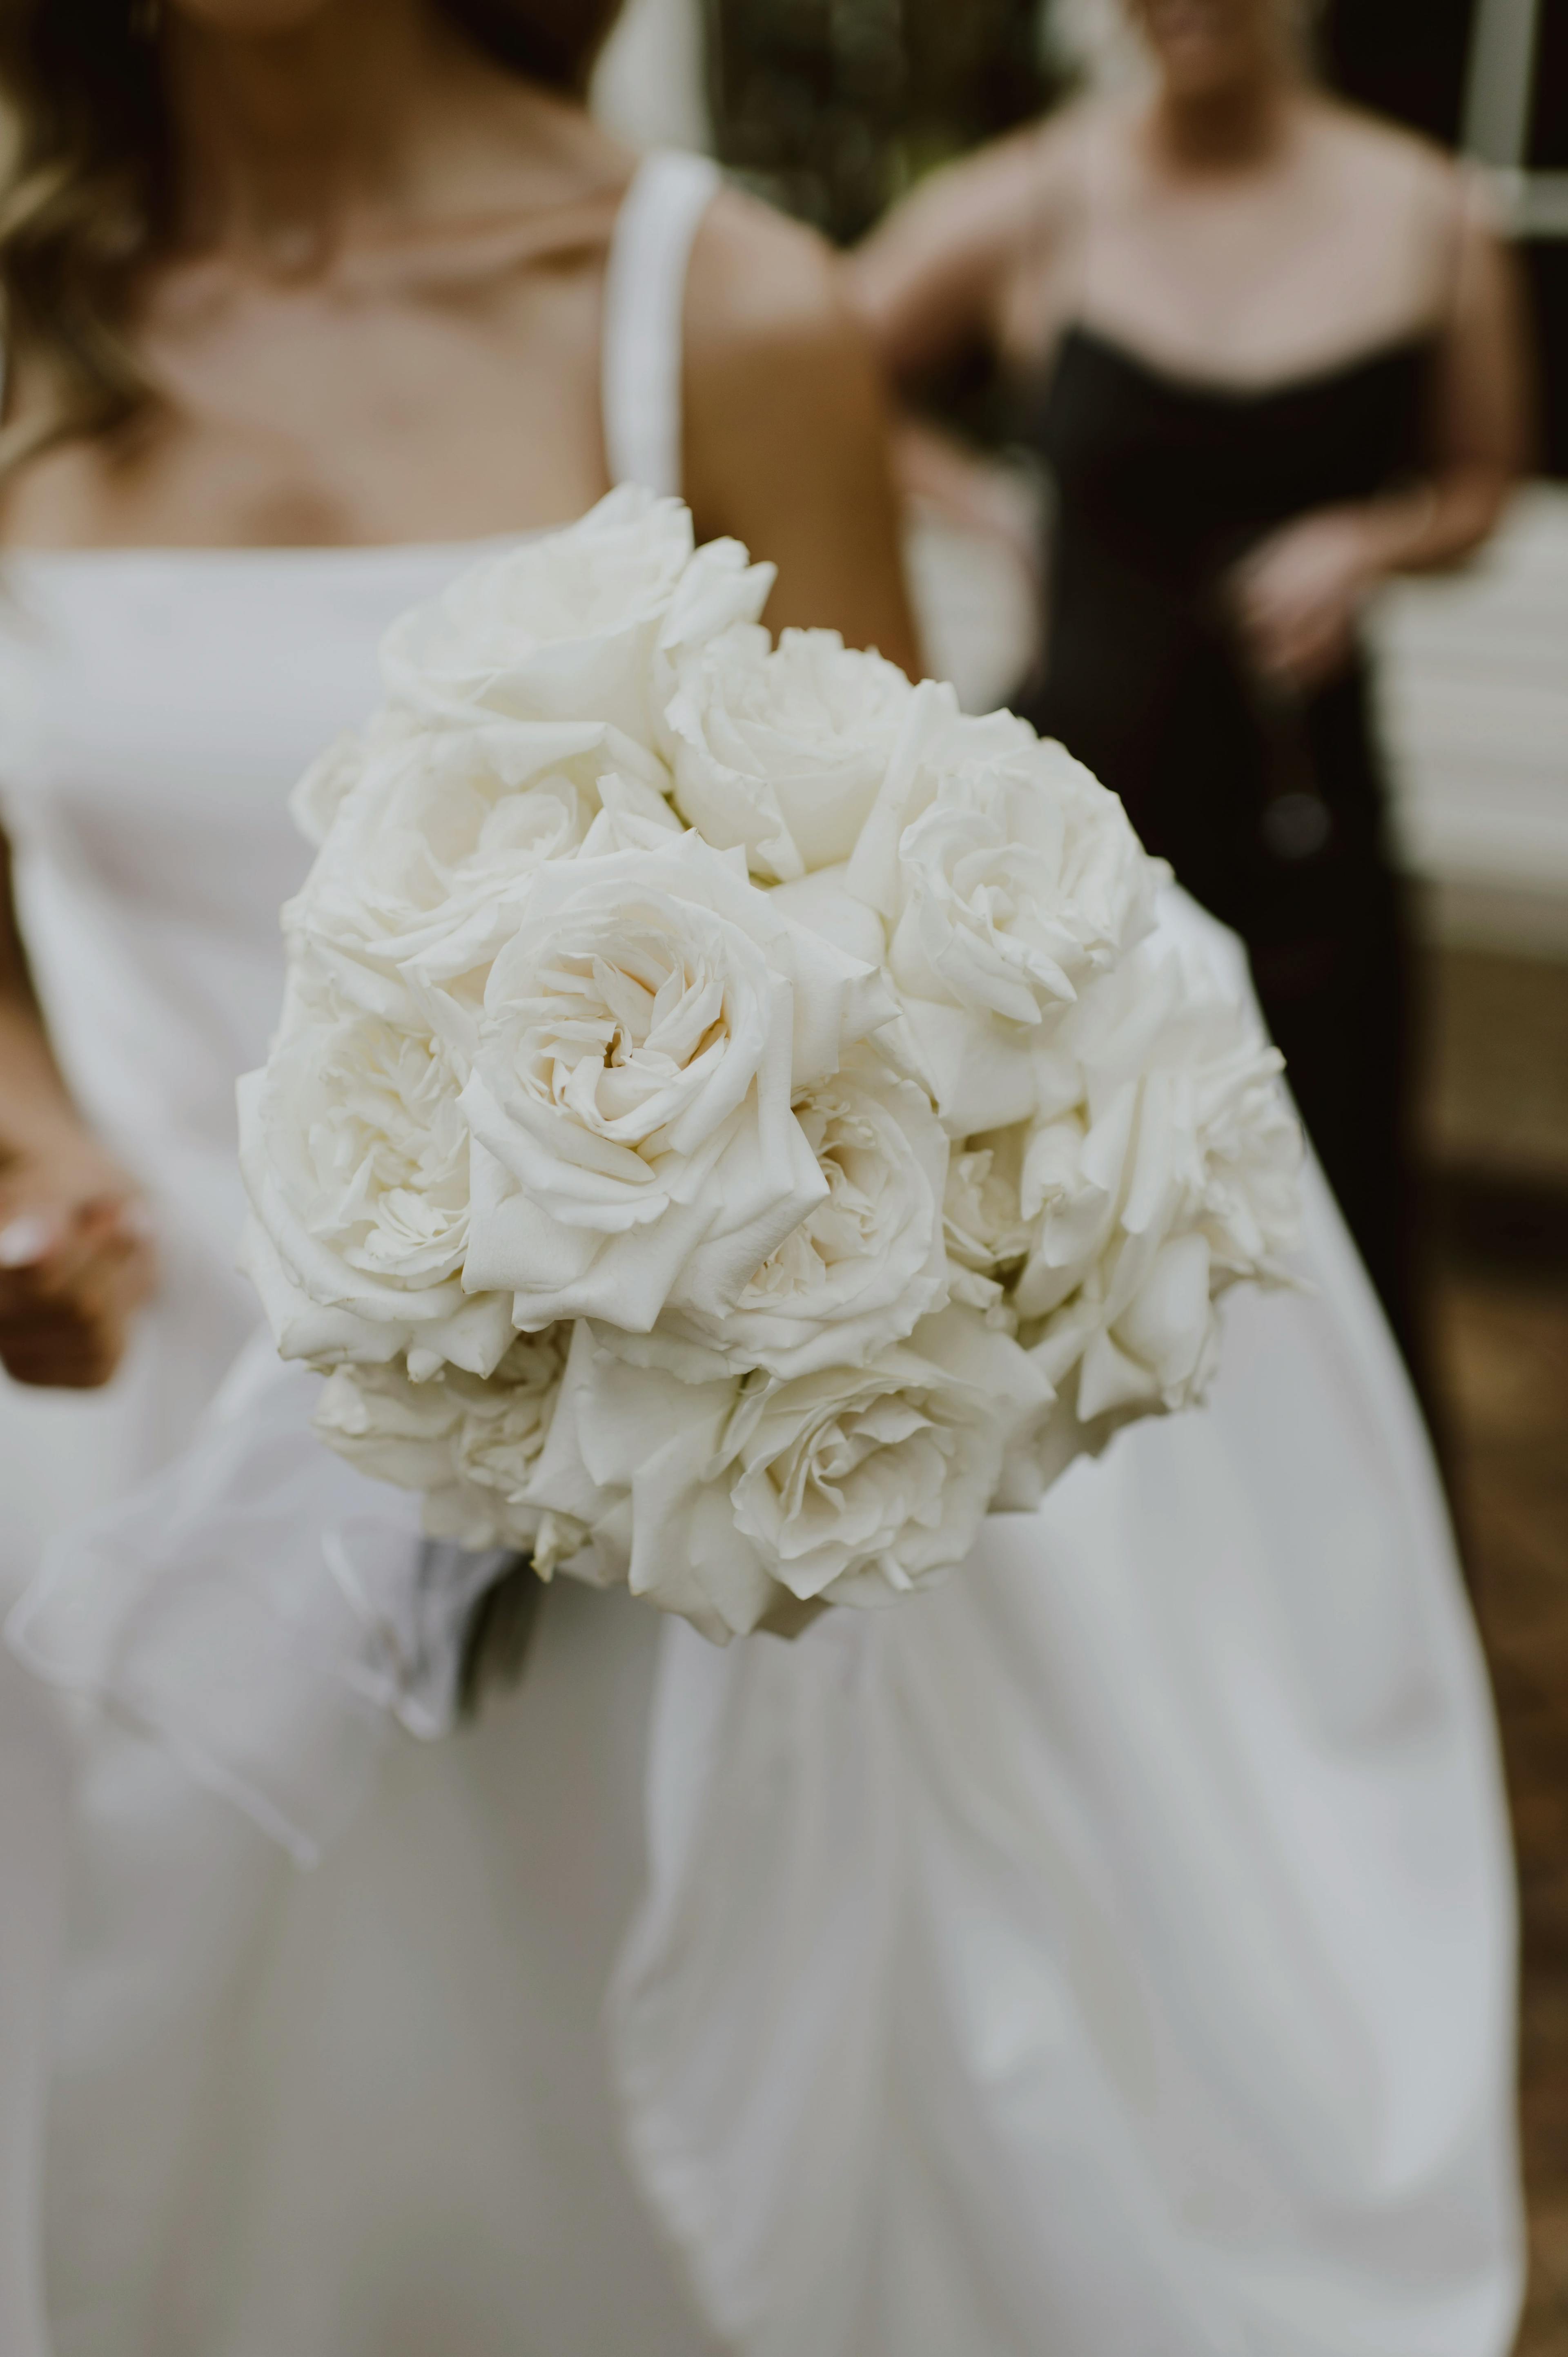 Bride bouquet made of crisp white roses